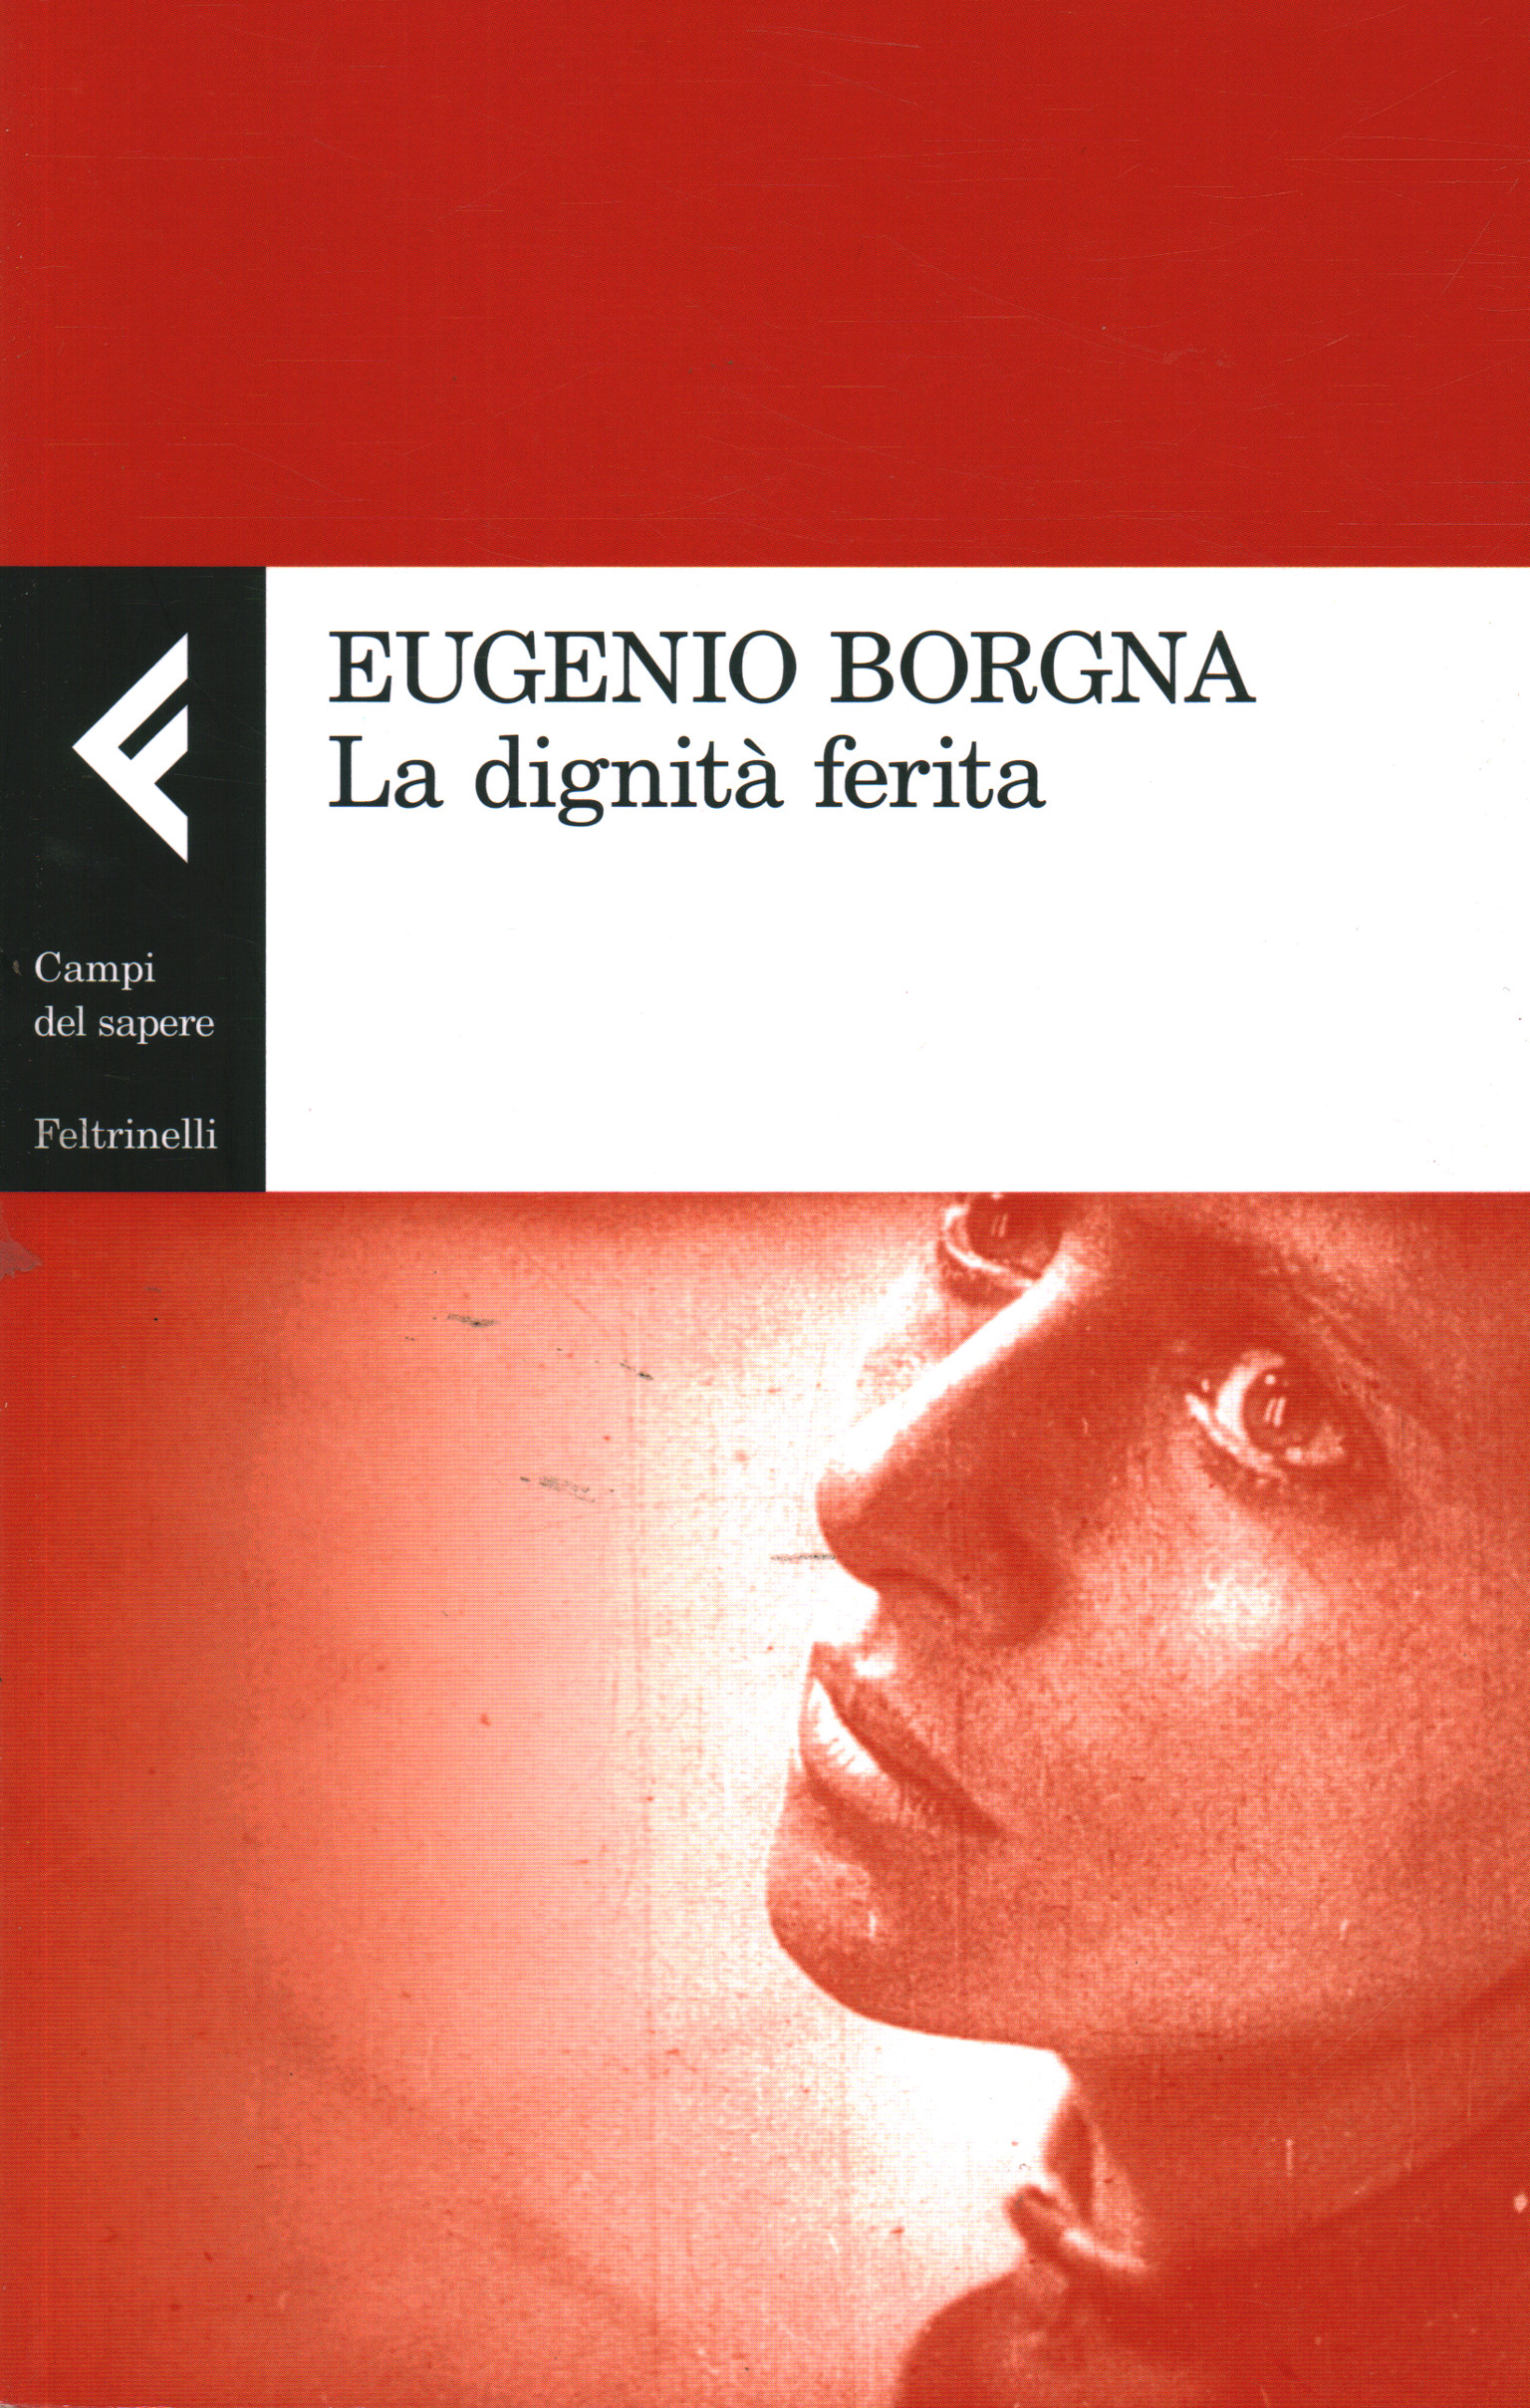 Das würde die wunde, Eugenio Borgna